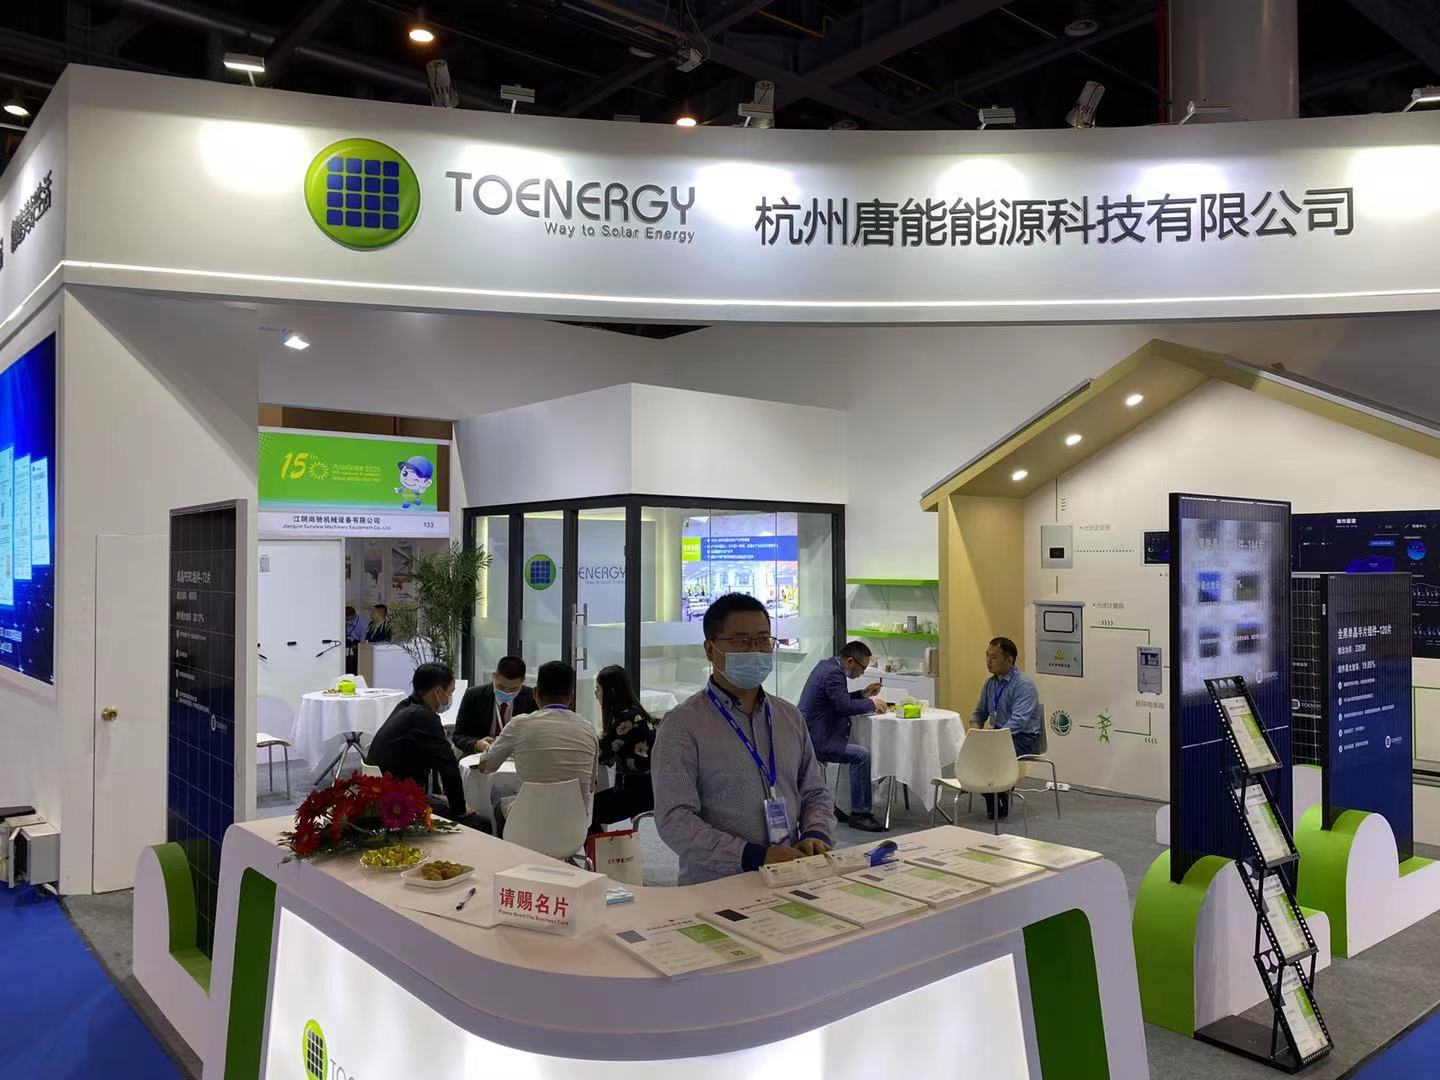 Toenergy Participated in Hangzhou AsiaSolar 2020 Exhibition